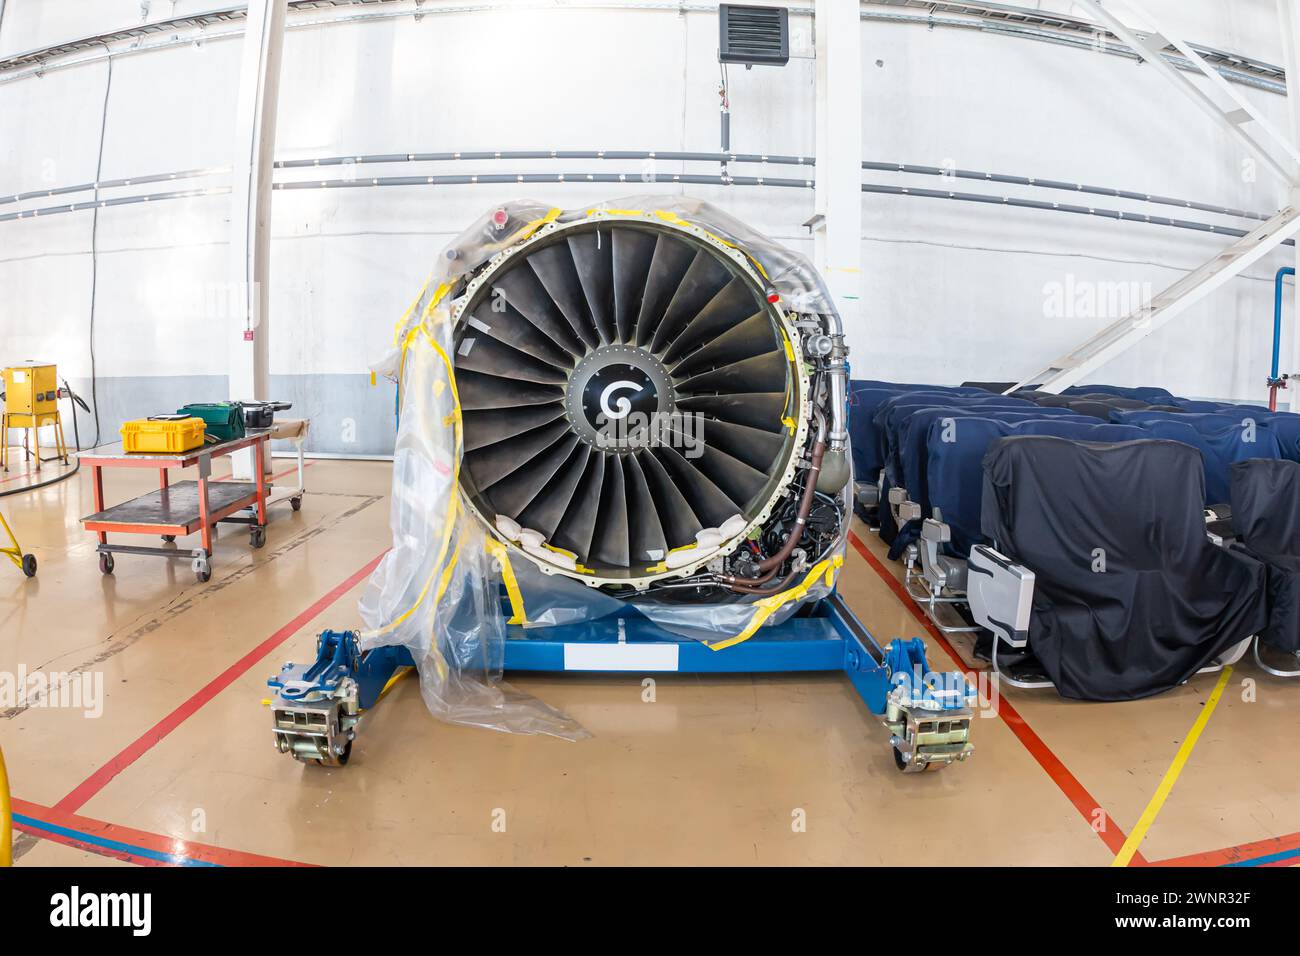 High-bypass turbofan aircraft engine in aviation hangar Stock Photo